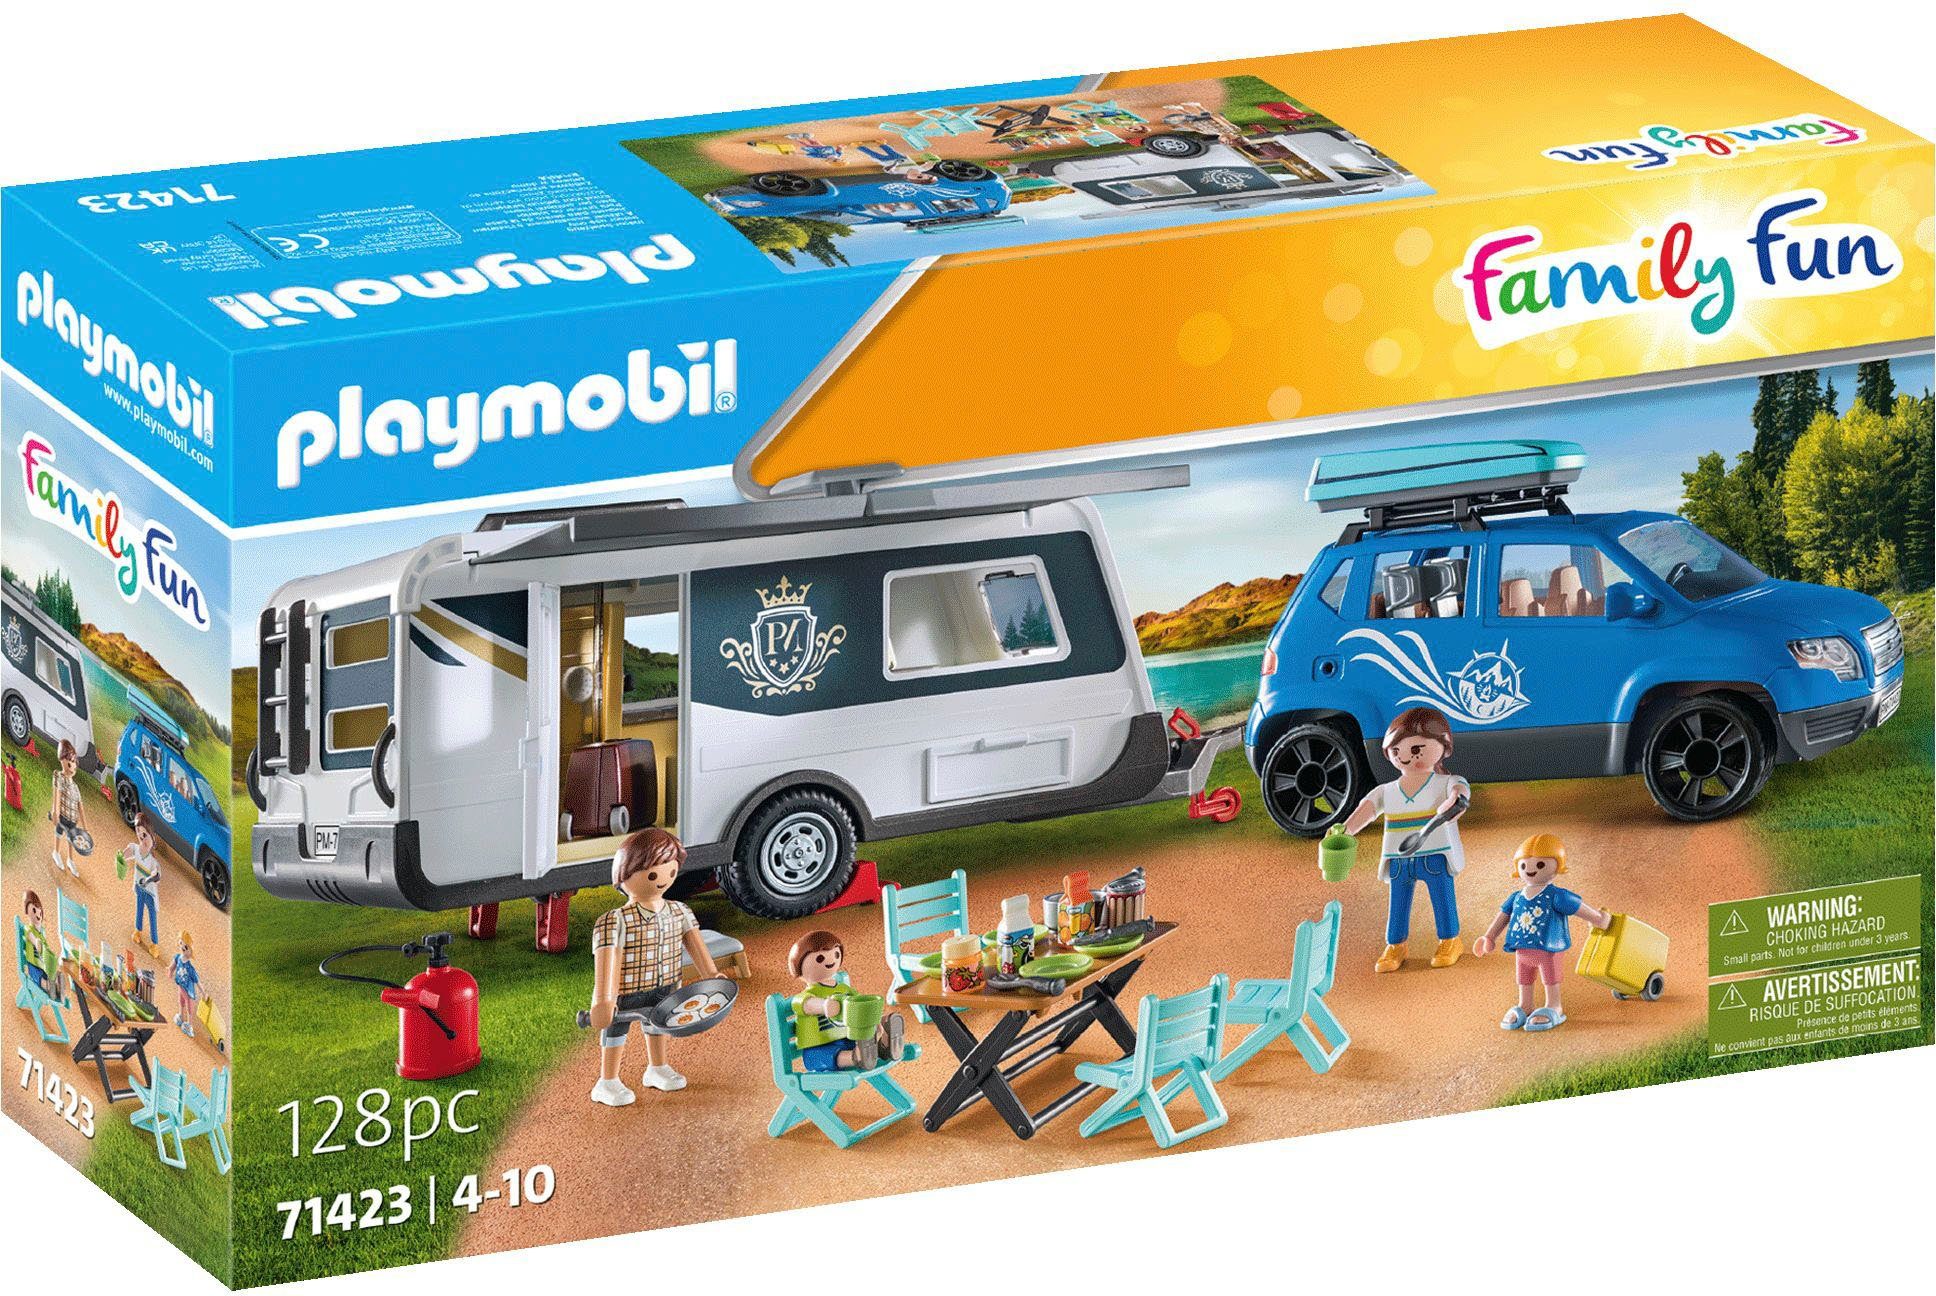 Playmobil® Konstruktions-Spielset Wohnwagen mit Auto (71423), Family & Fun, (128 St) | Playmobil Family Fun